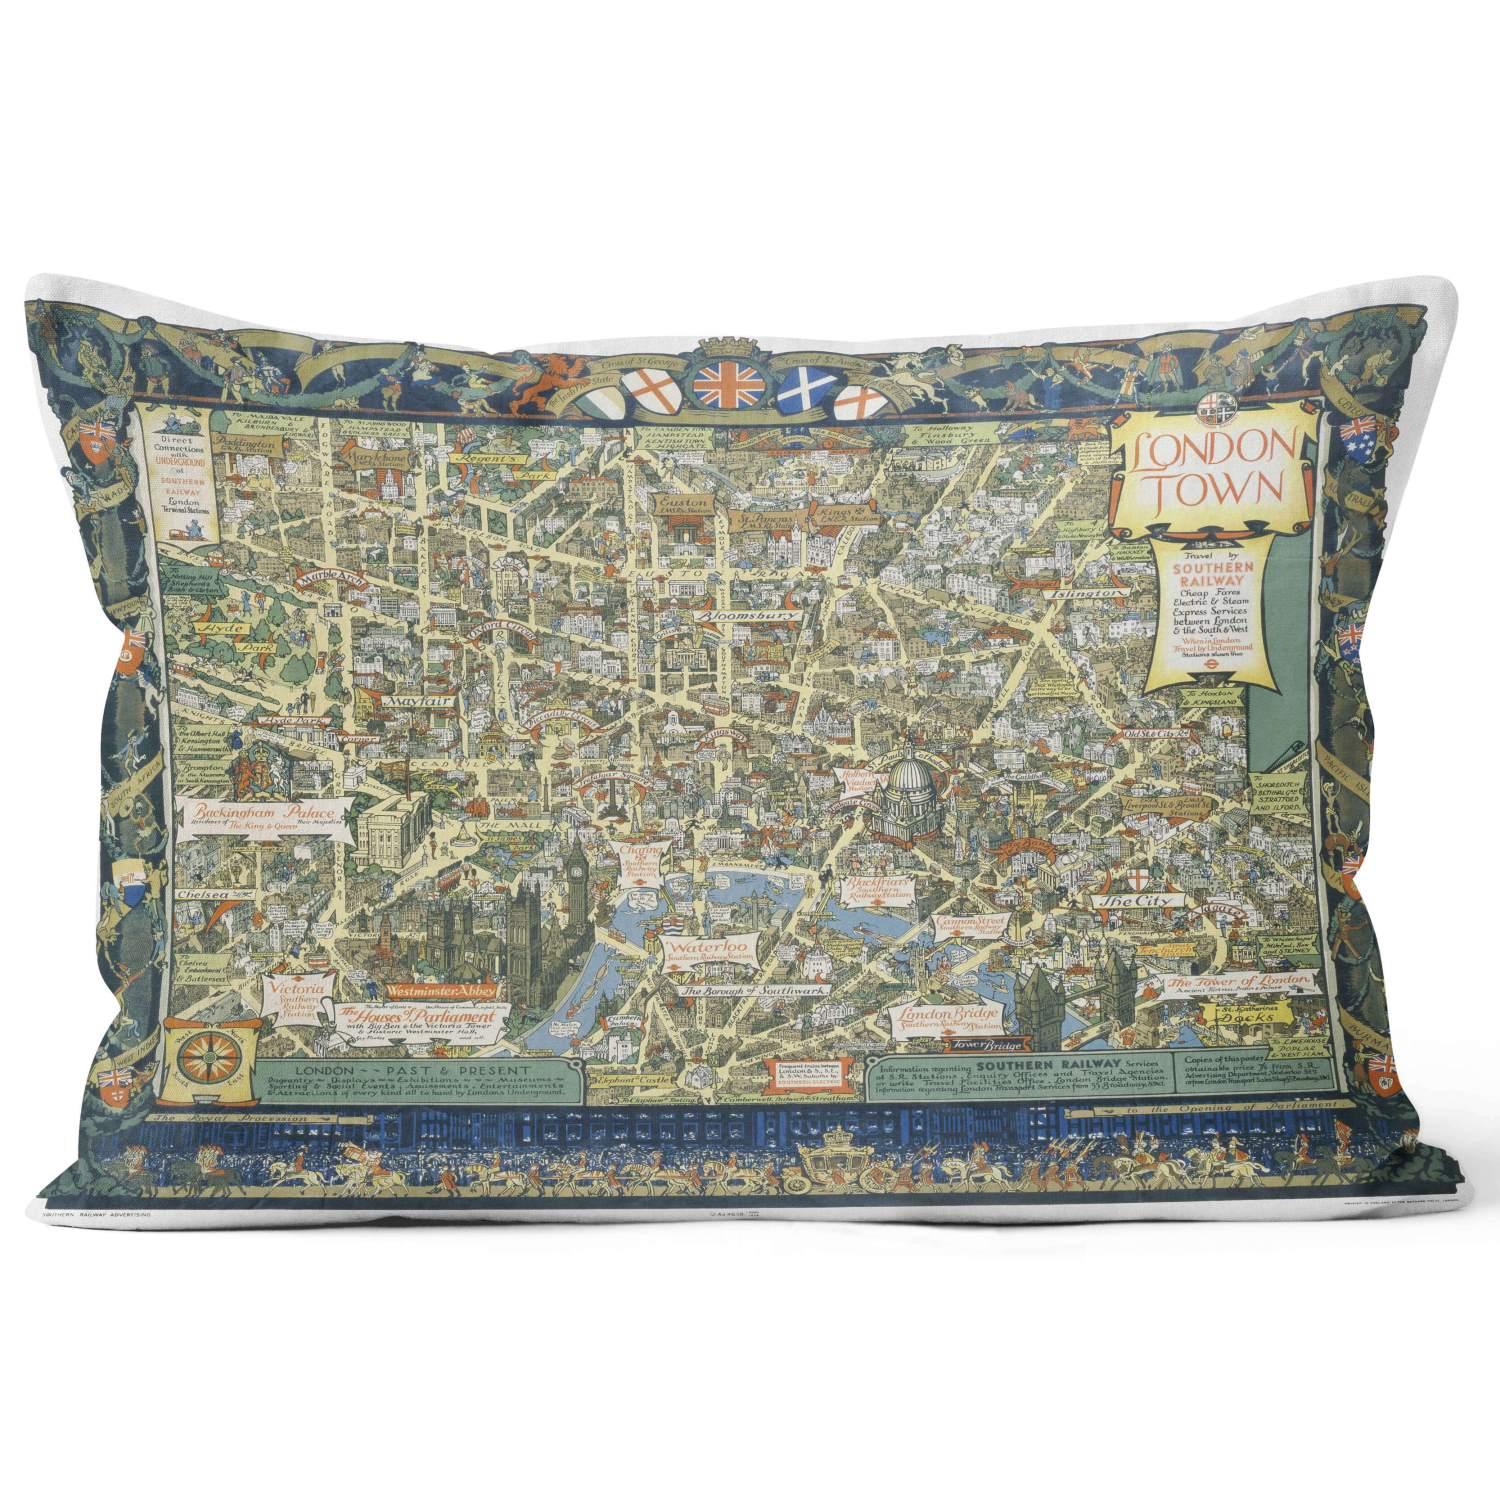 London Map - National Railways Museum Cushion - Handmade Cushions UK - WeLoveCushions